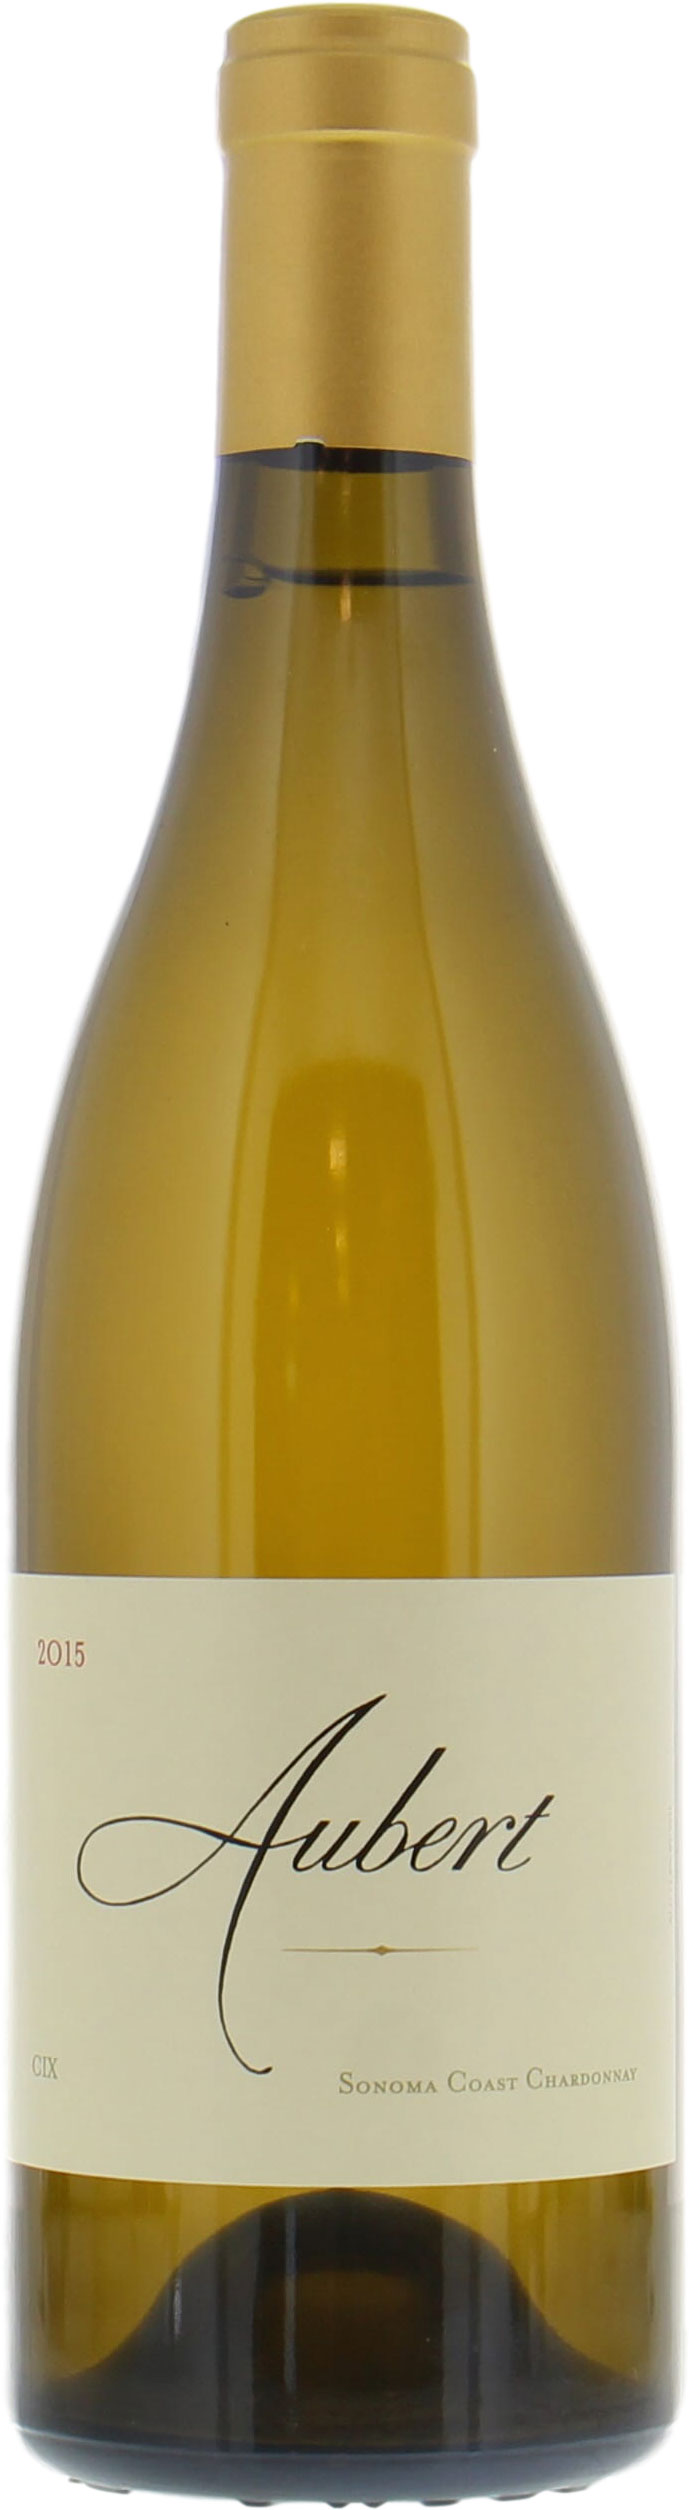 Aubert - CIX Chardonnay 2015 Perfect